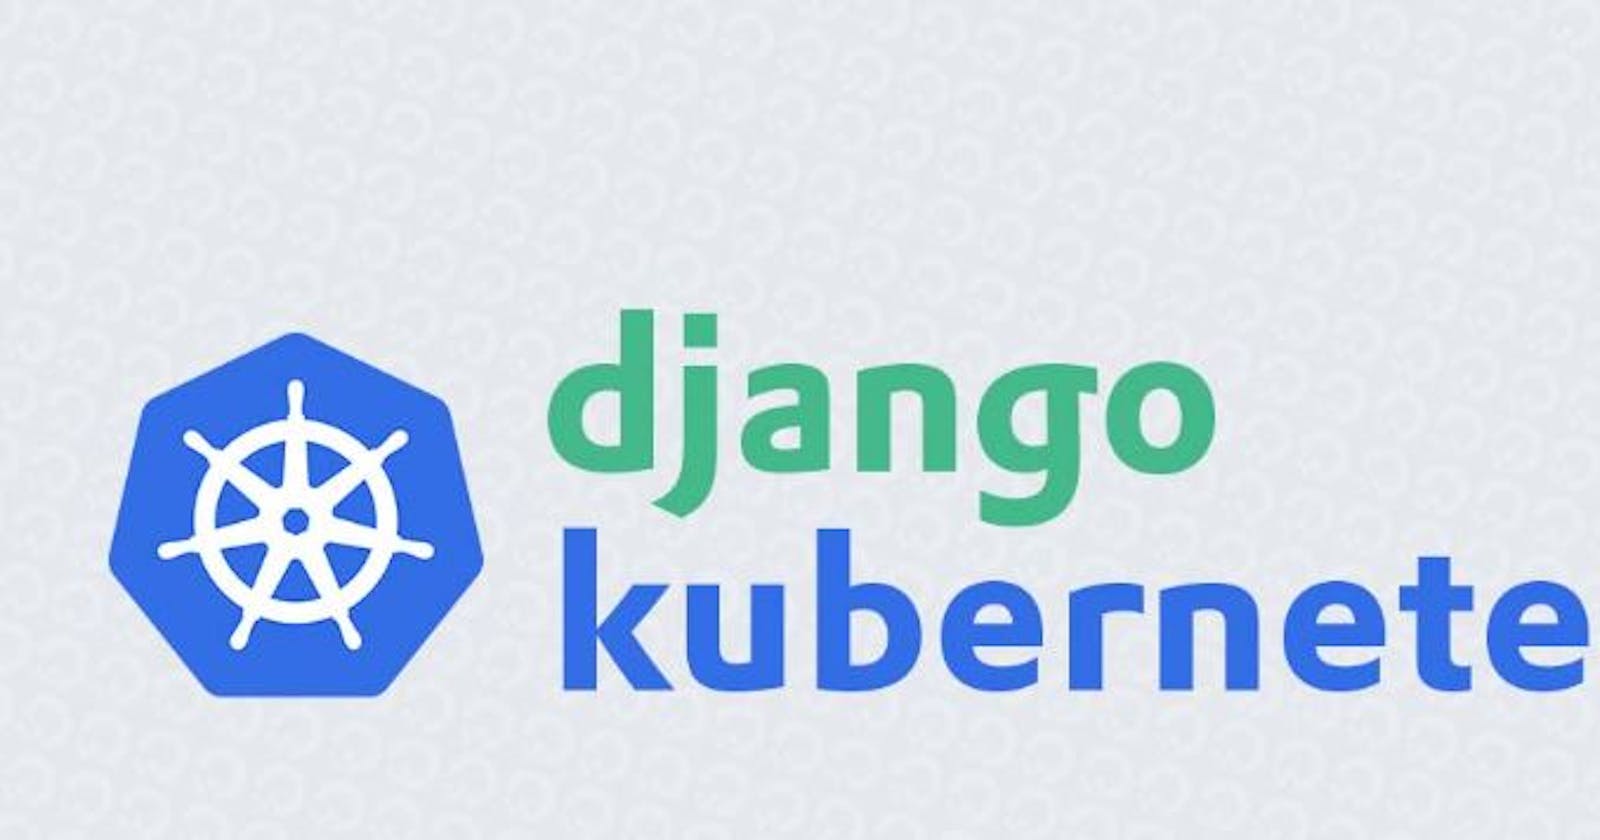 Easy steps for Django application deployment using Kubernetes